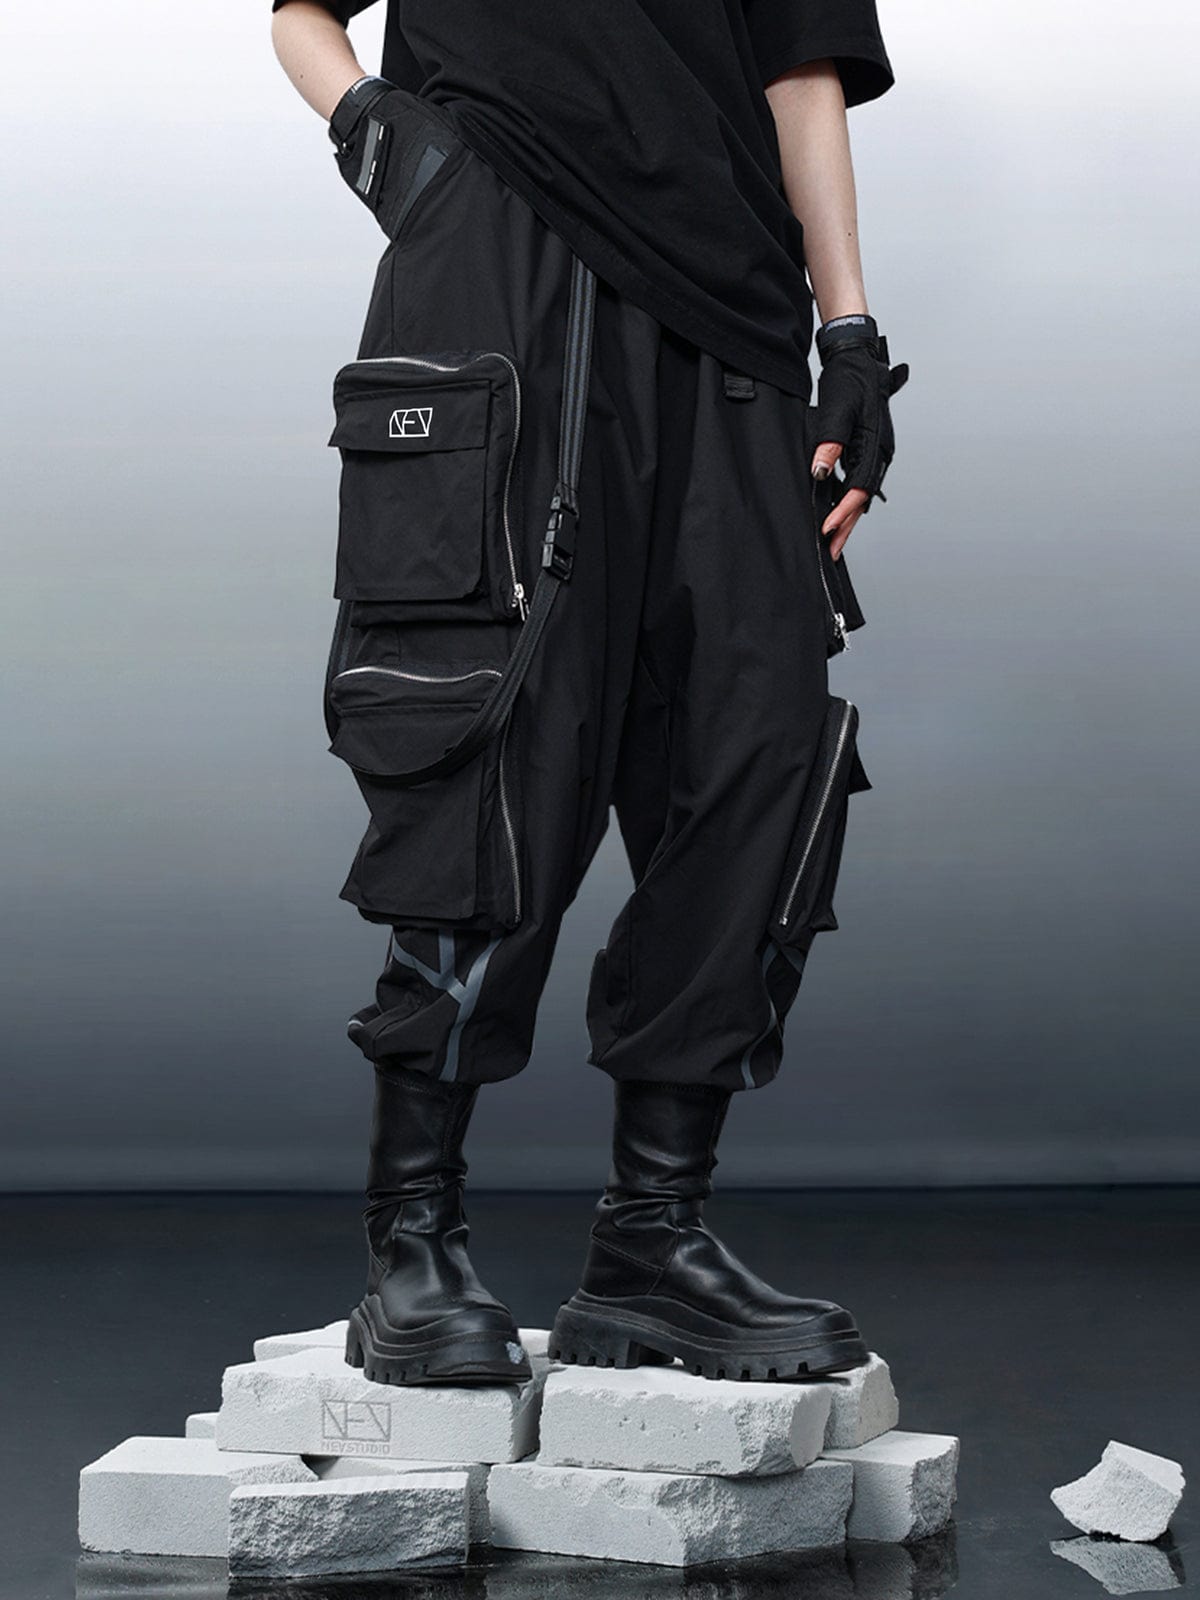 Mens Cargo Pants Hip Hop Harem Joggers Harajuku Sport Trousers Pockets  Fashion D | eBay